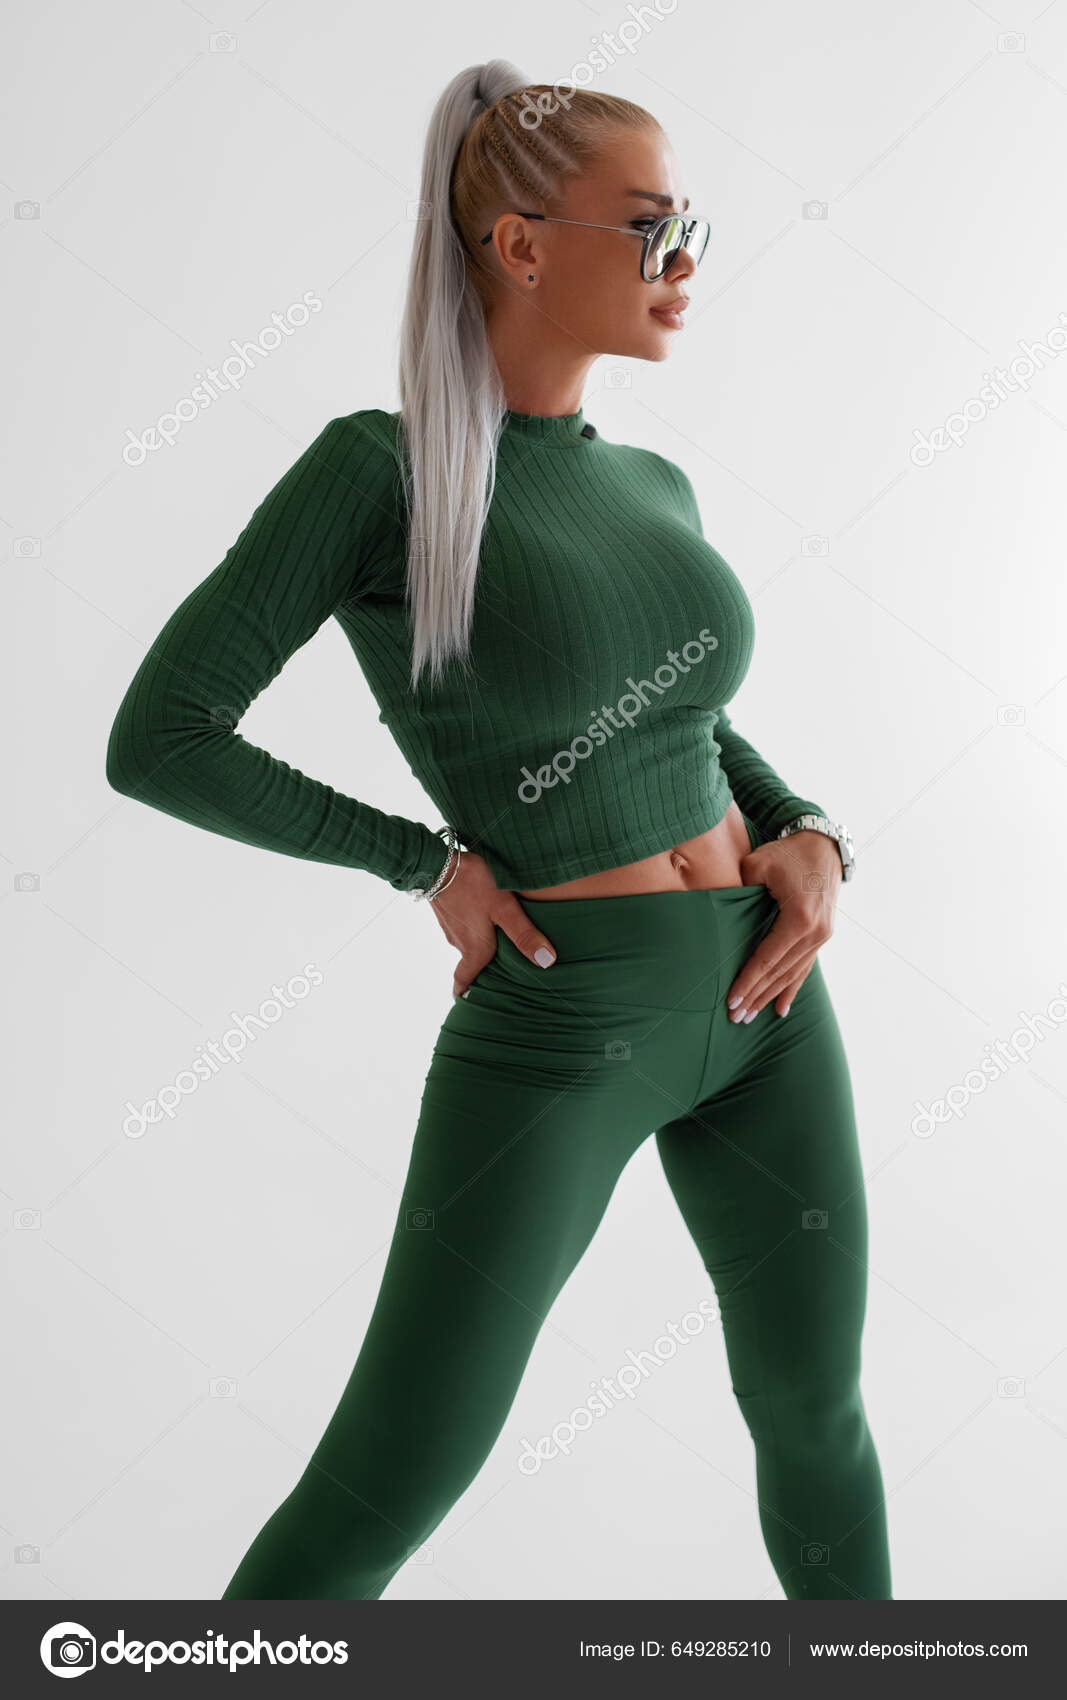 https://st5.depositphotos.com/3383955/64928/i/1600/depositphotos_649285210-stock-photo-sexy-fitness-woman-beautiful-athletic.jpg